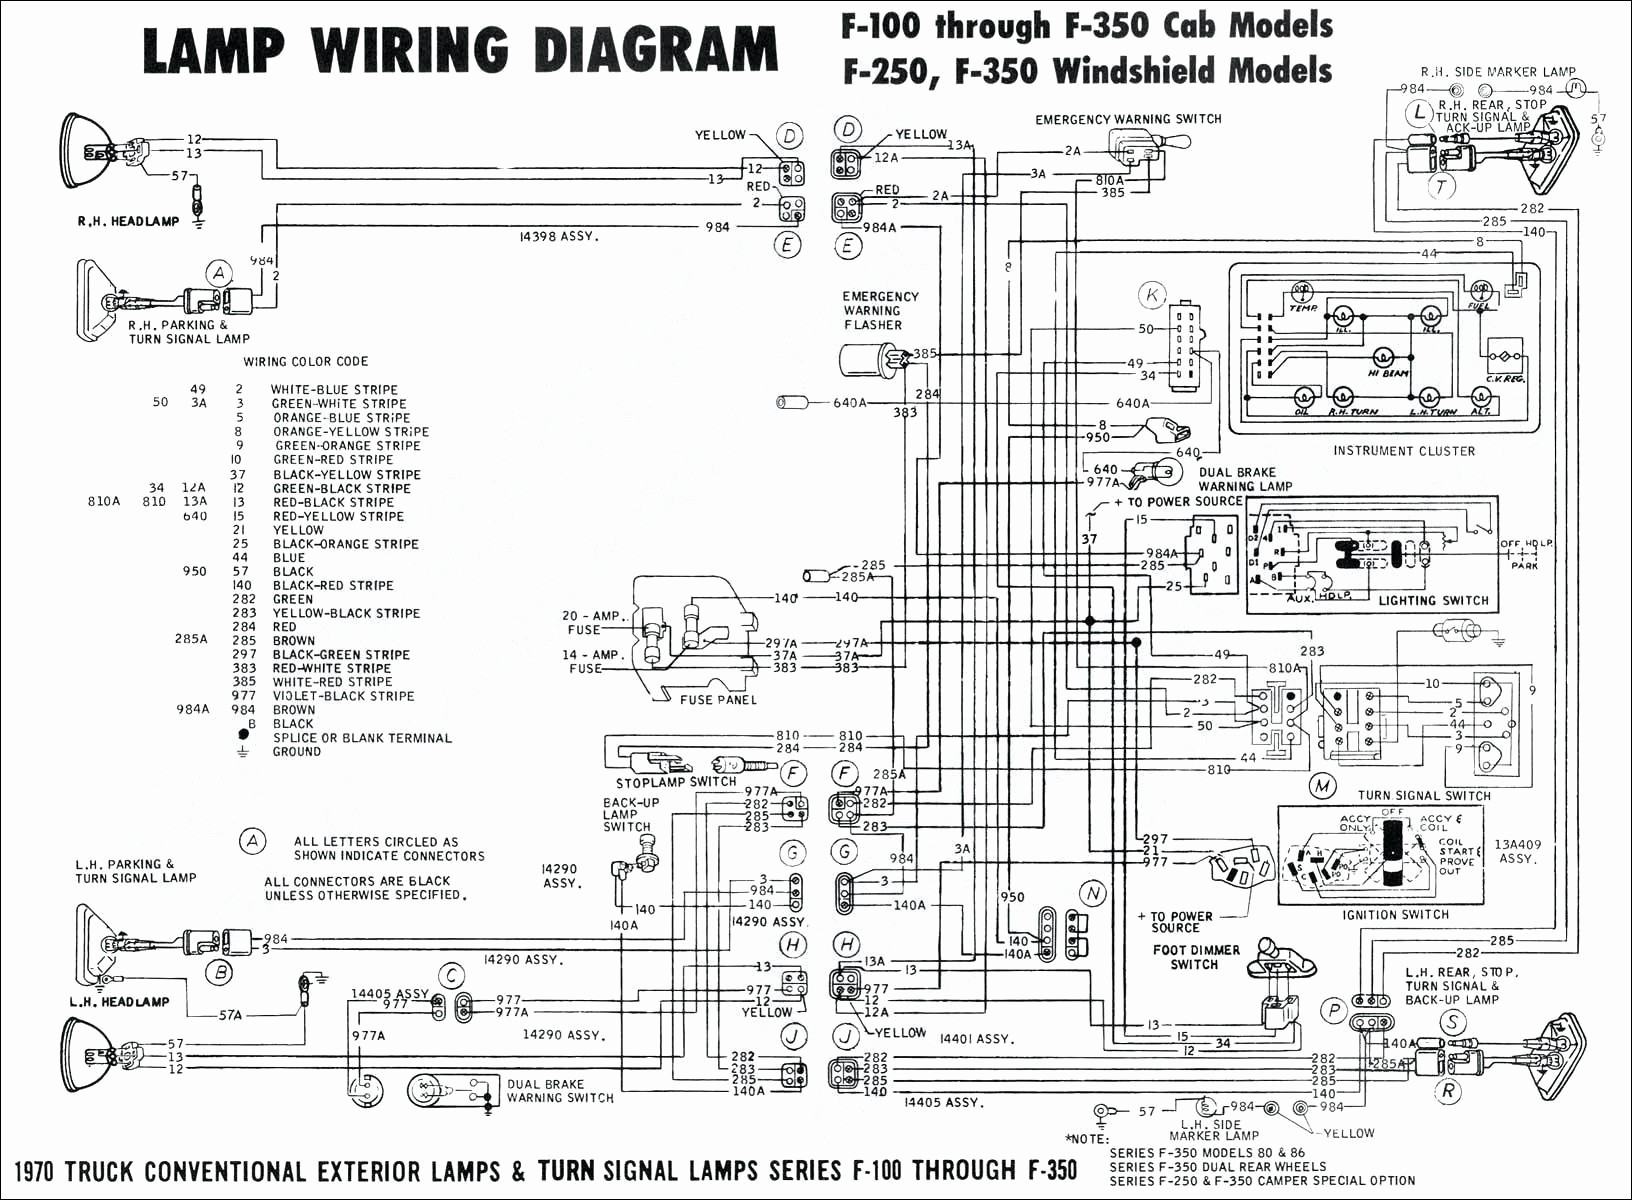 Diagram Rv Holding Tank Monitor Panel Wiring Diagram Full Version Hd Quality Wiring Diagram Kineticdiagrams Com Lamplificateur Fr